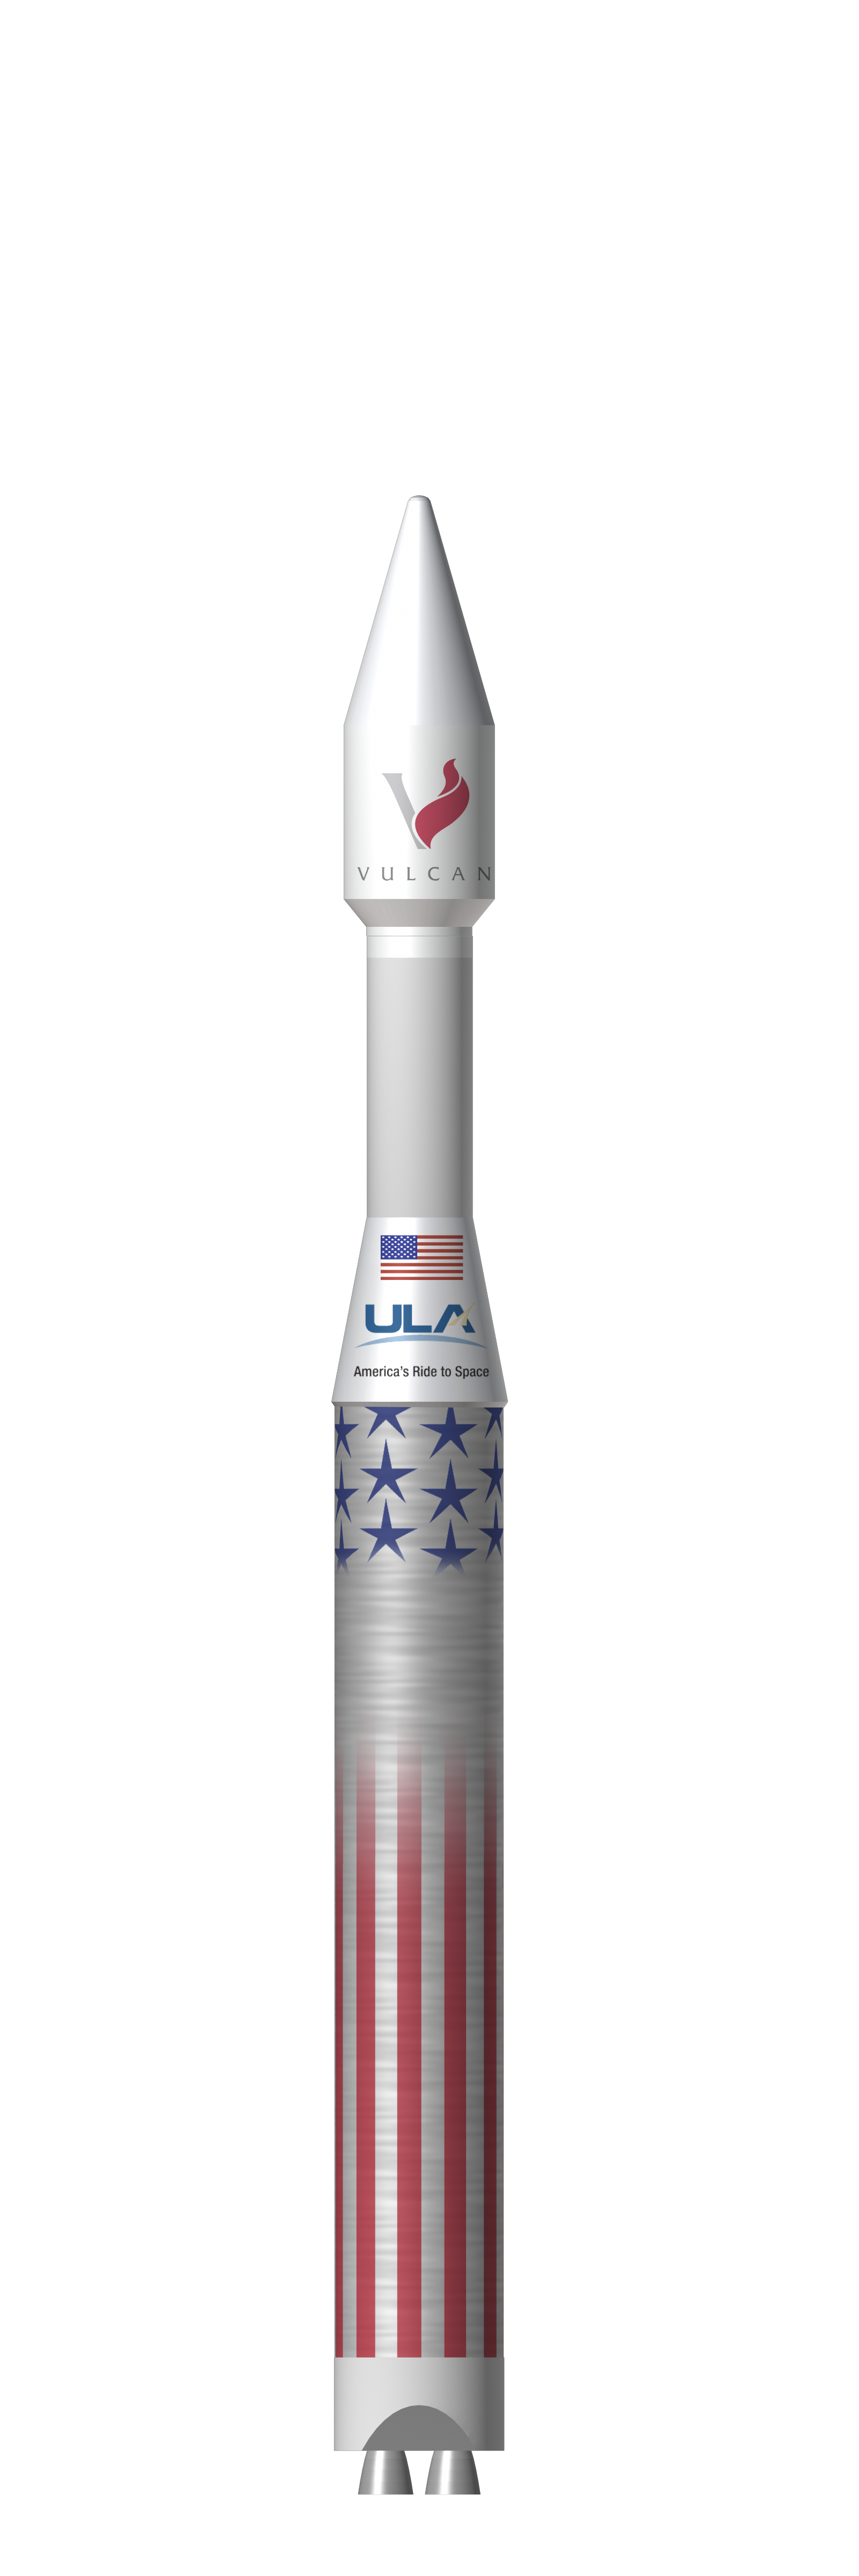 Artwork: ULA Vulcan rocket revealed – Spaceflight Now1600 x 4800